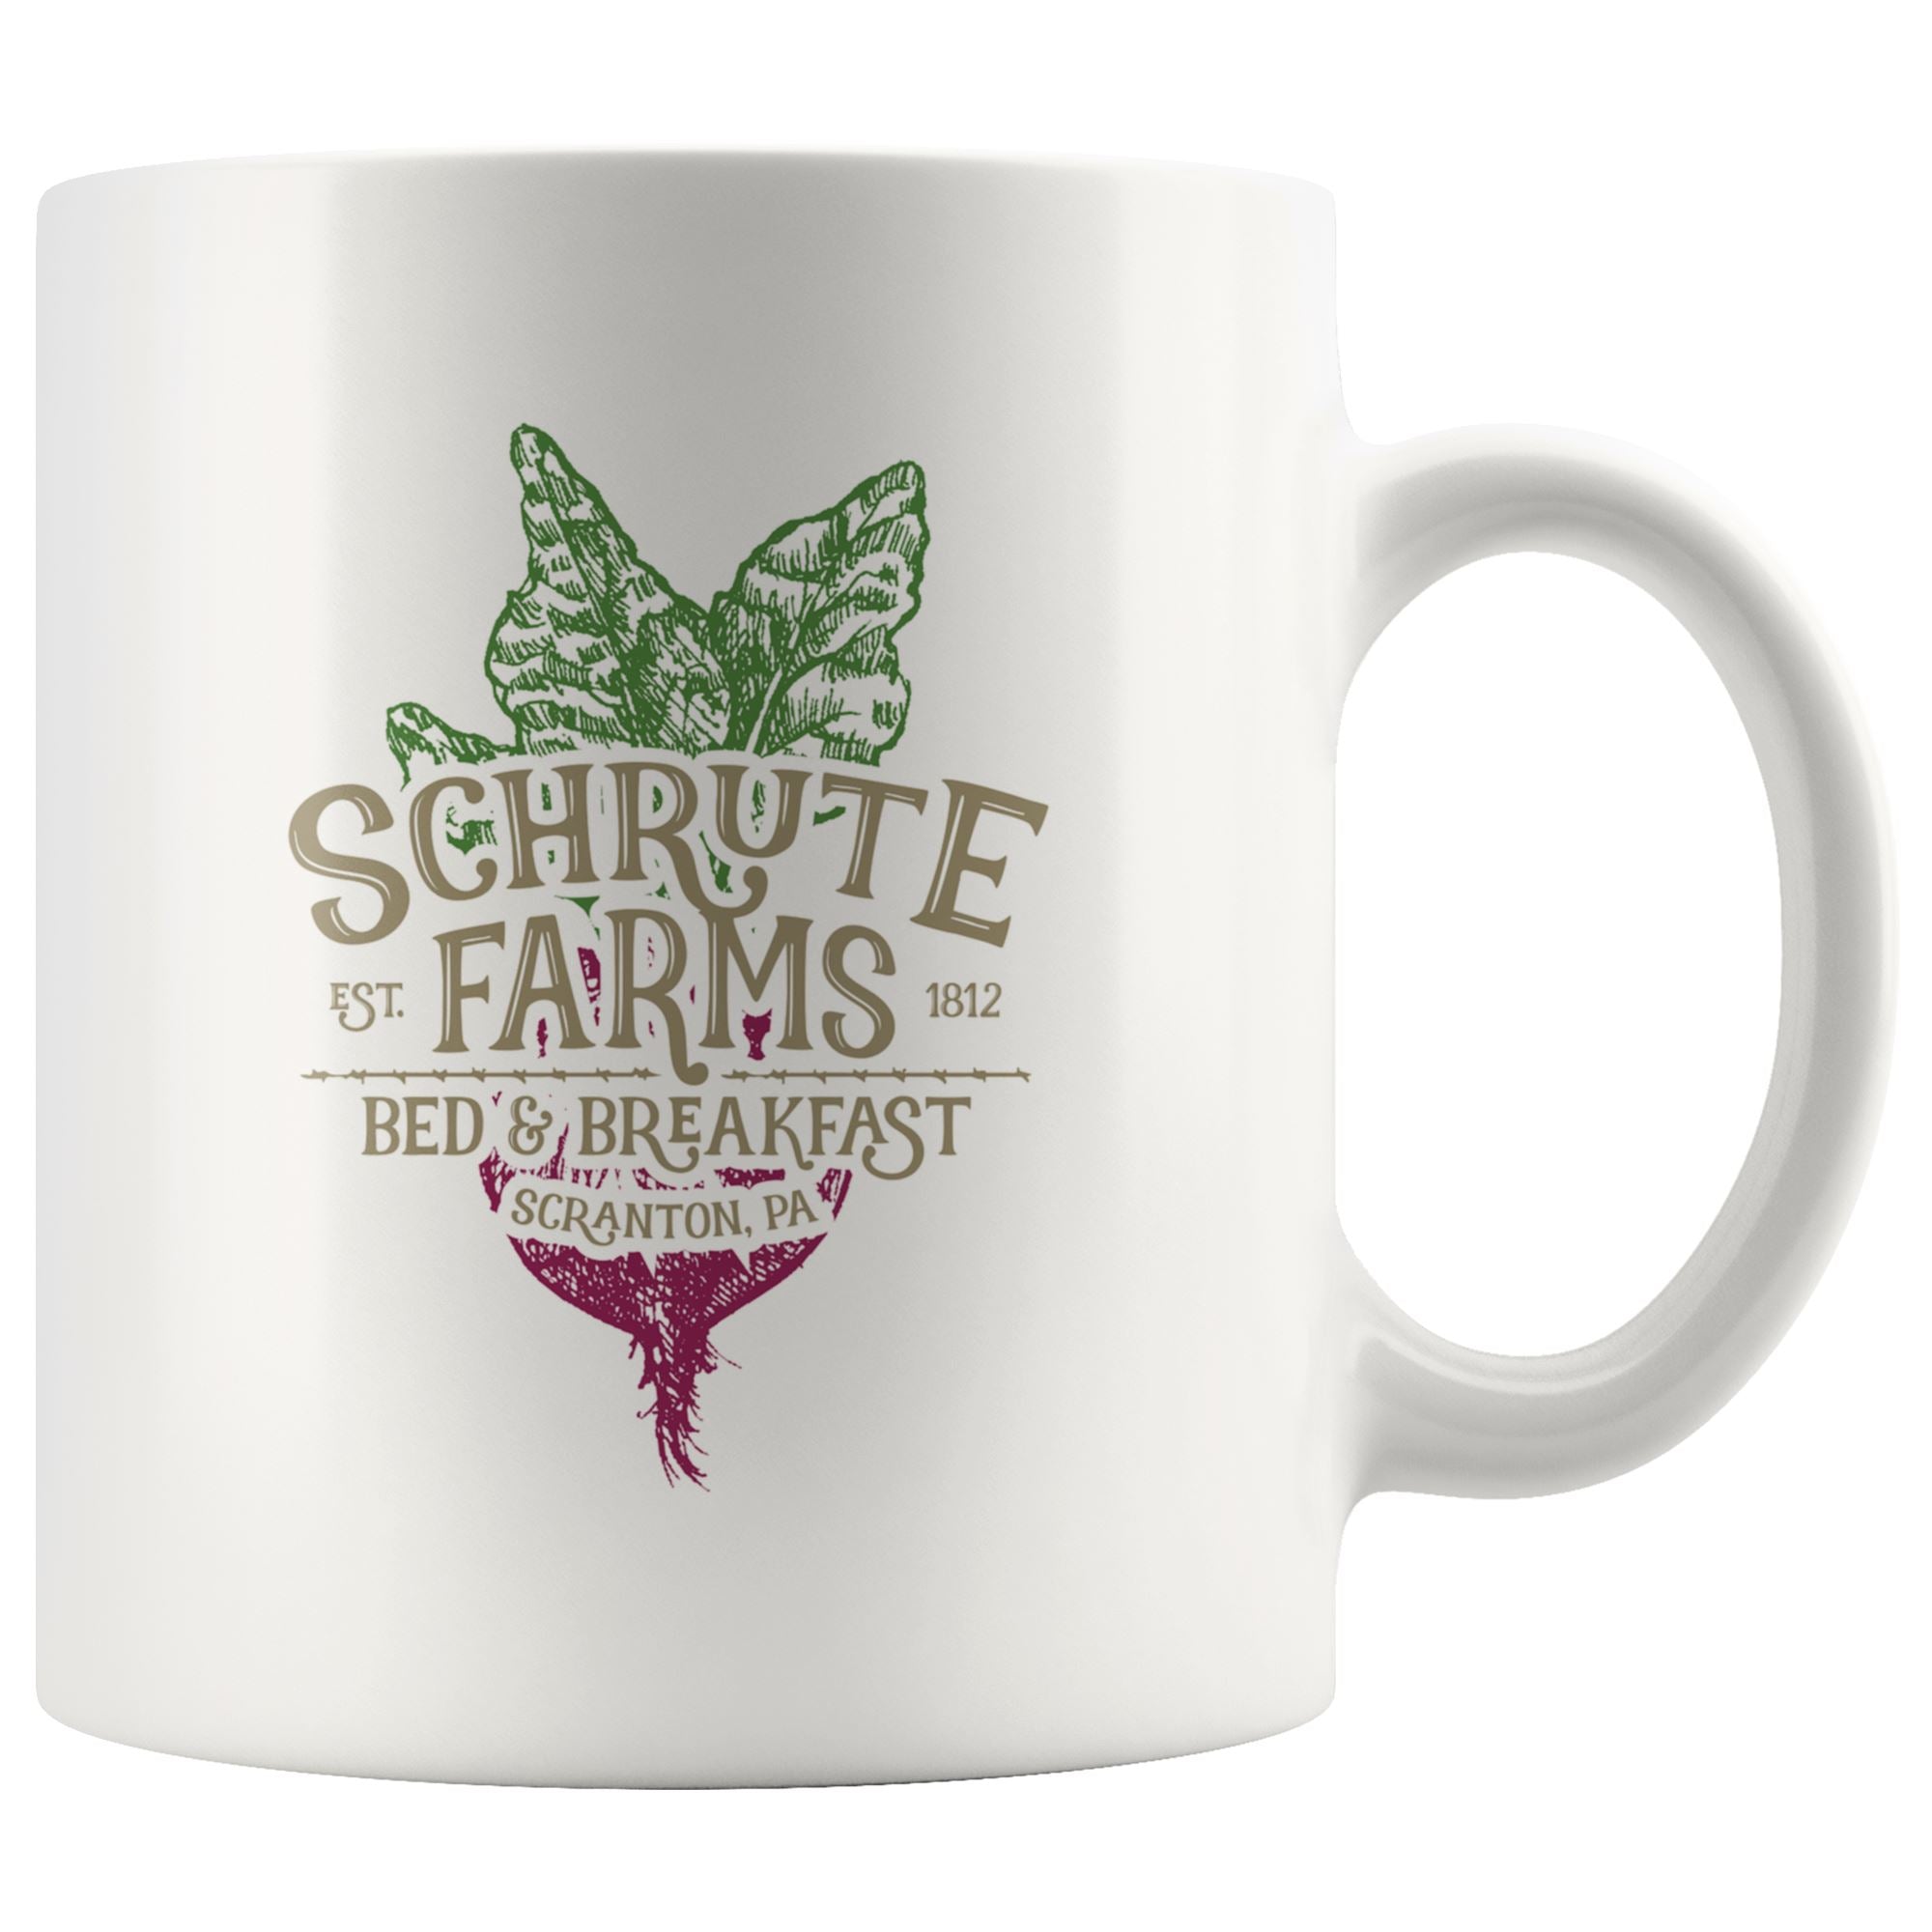 Schrute Farms Drinkware teelaunch 11oz Mug 